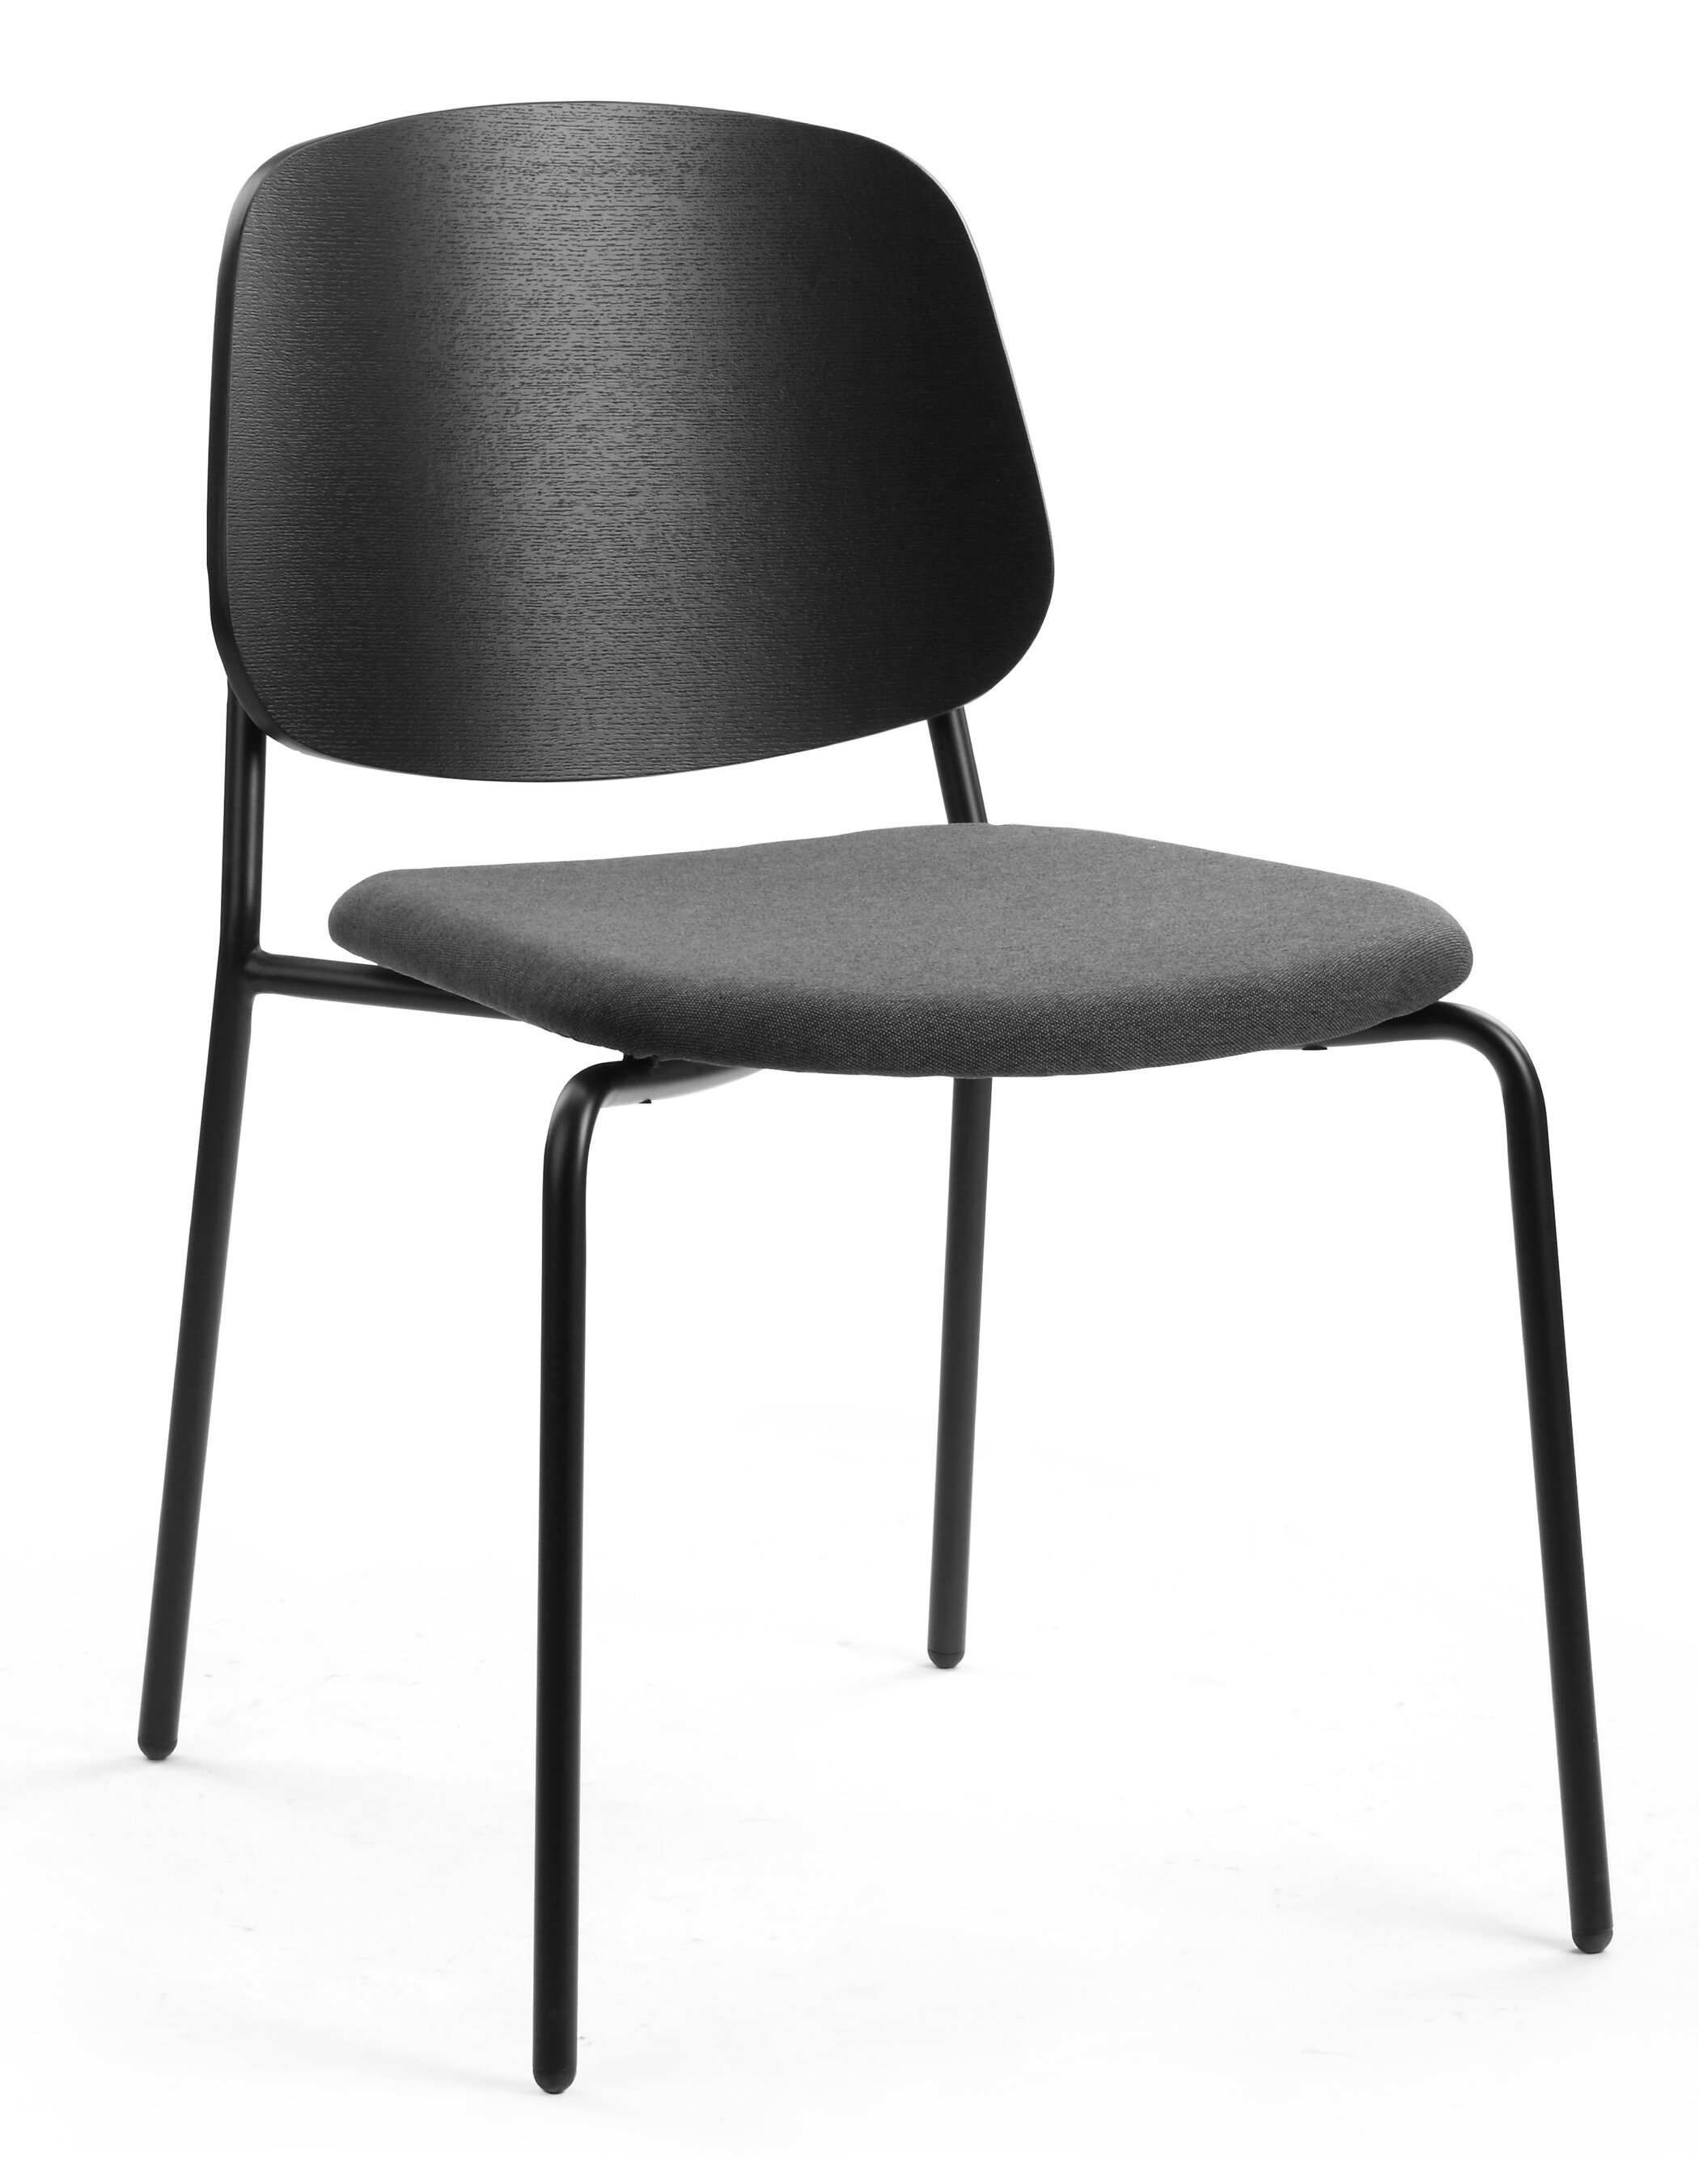 WS - Platform chair - Black ash & Seat UPH Dark grey (Front angle)